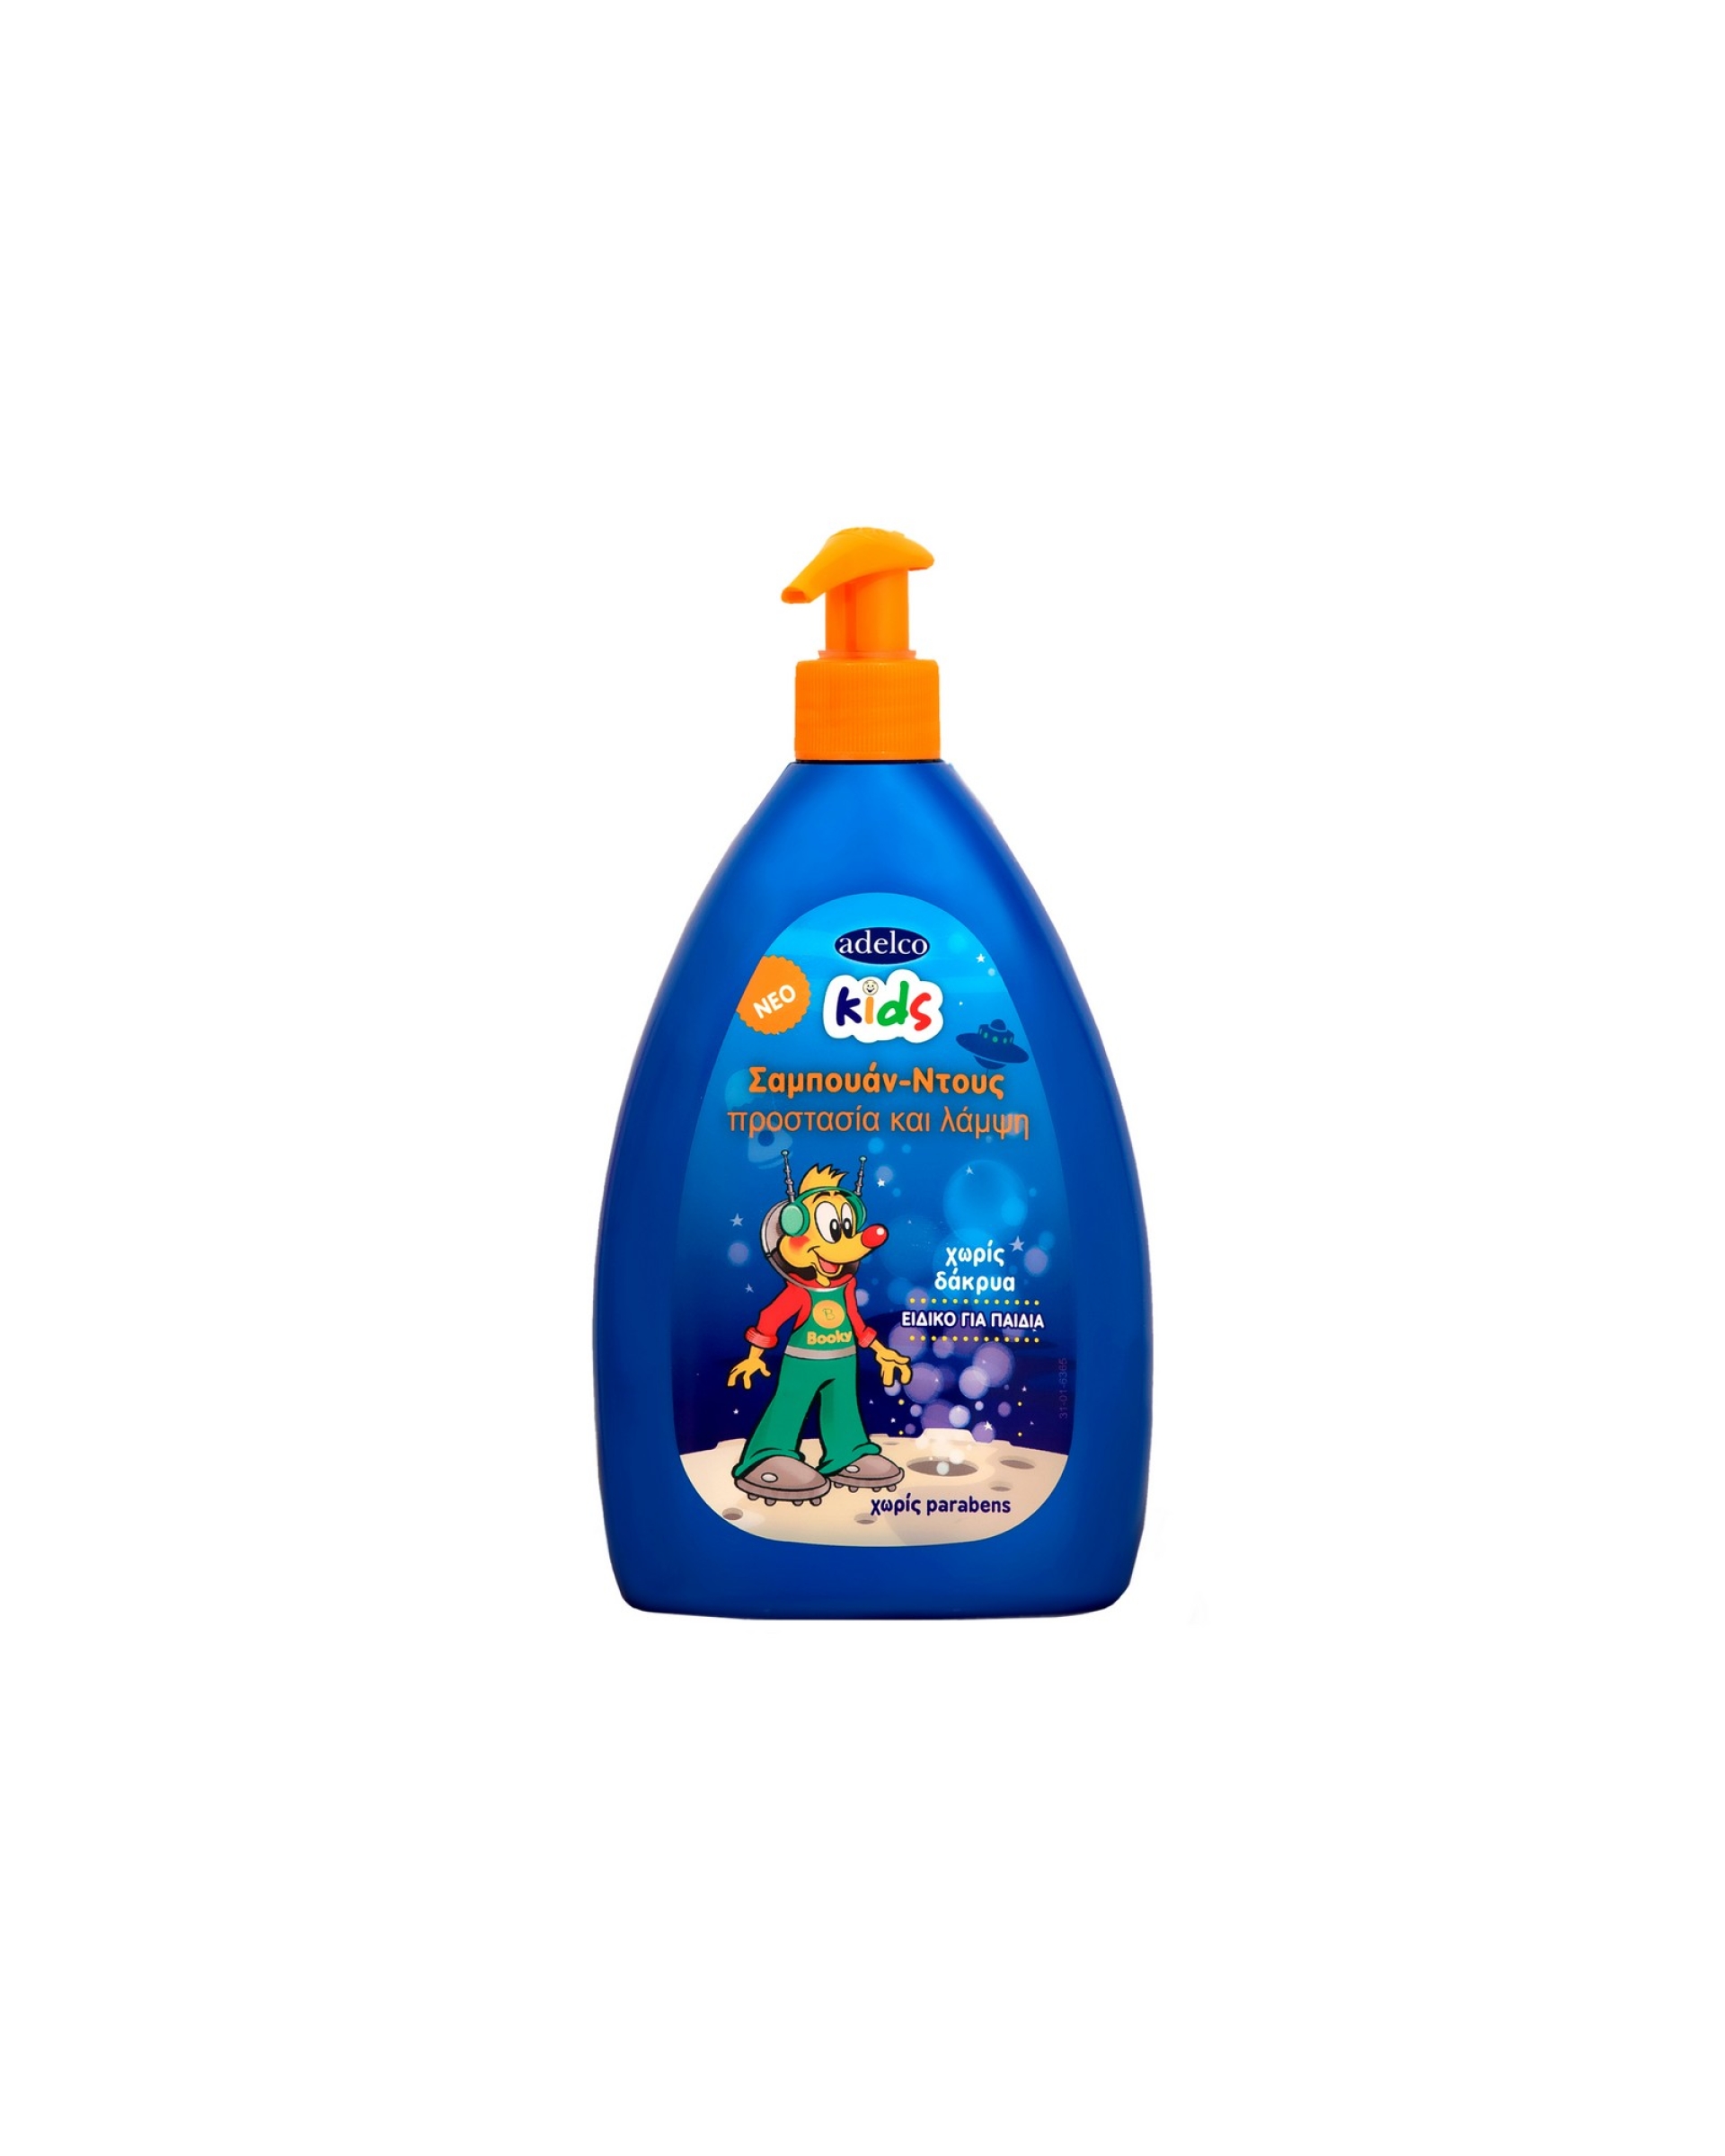 Adelco Kids Shampoo-Bath Protection and Shine